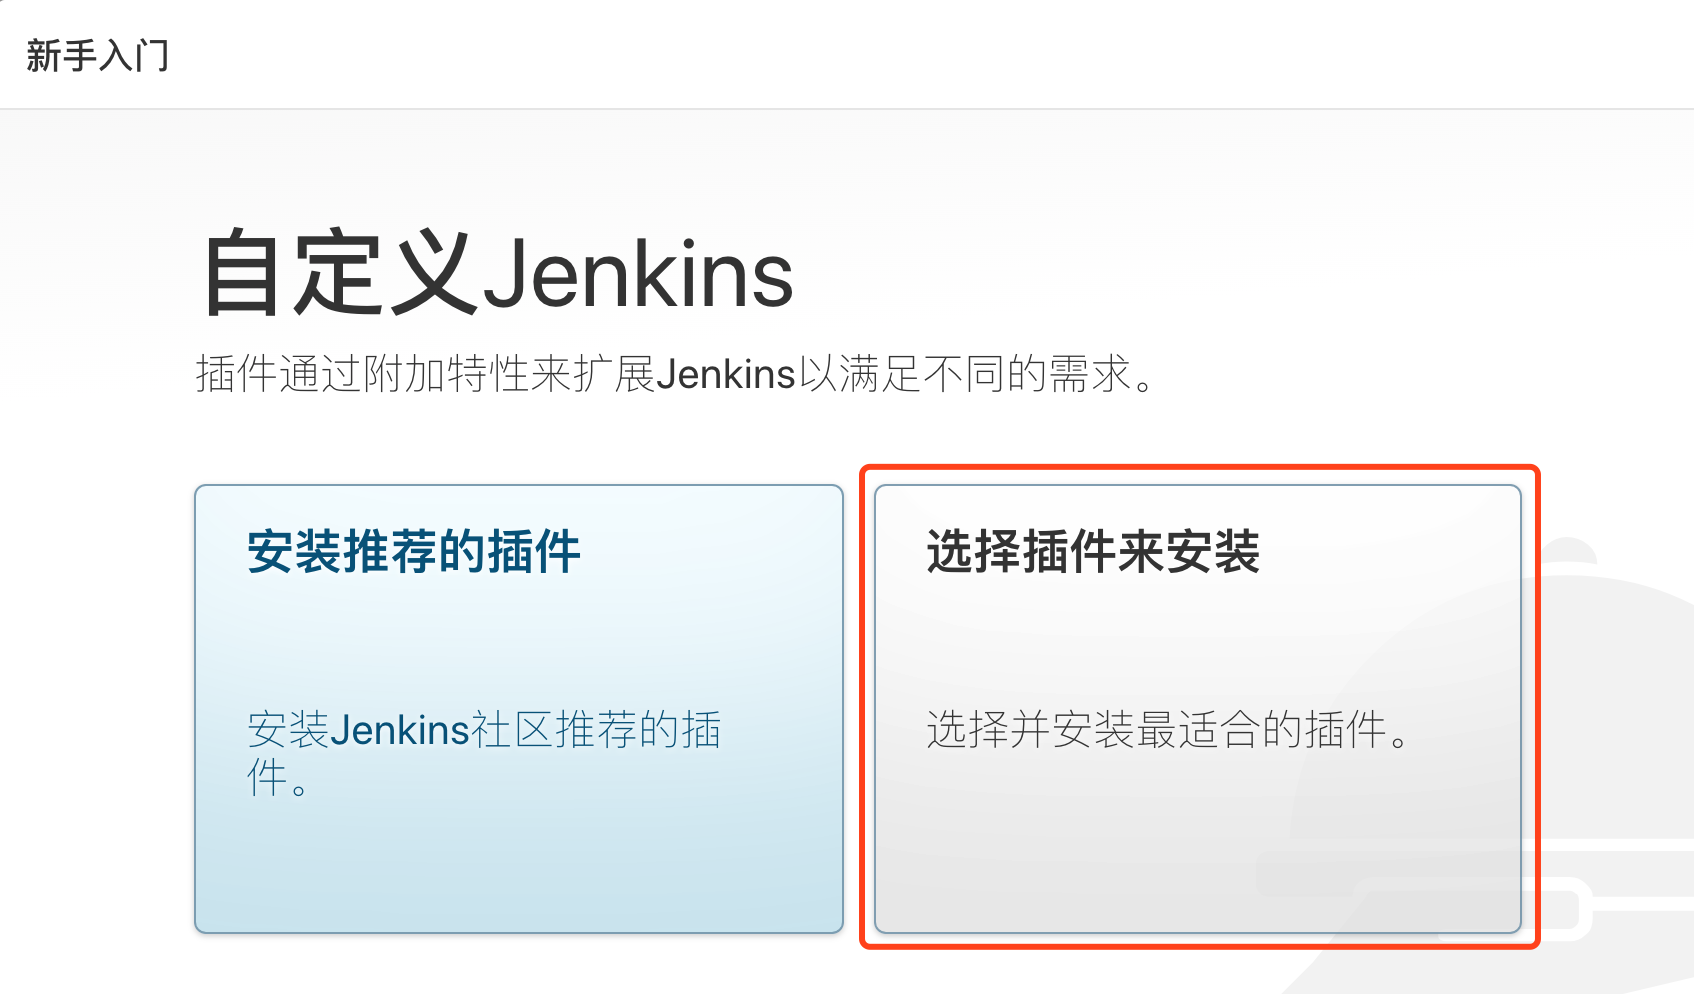 6. k8s + jenkins 实现持续集成(完) 